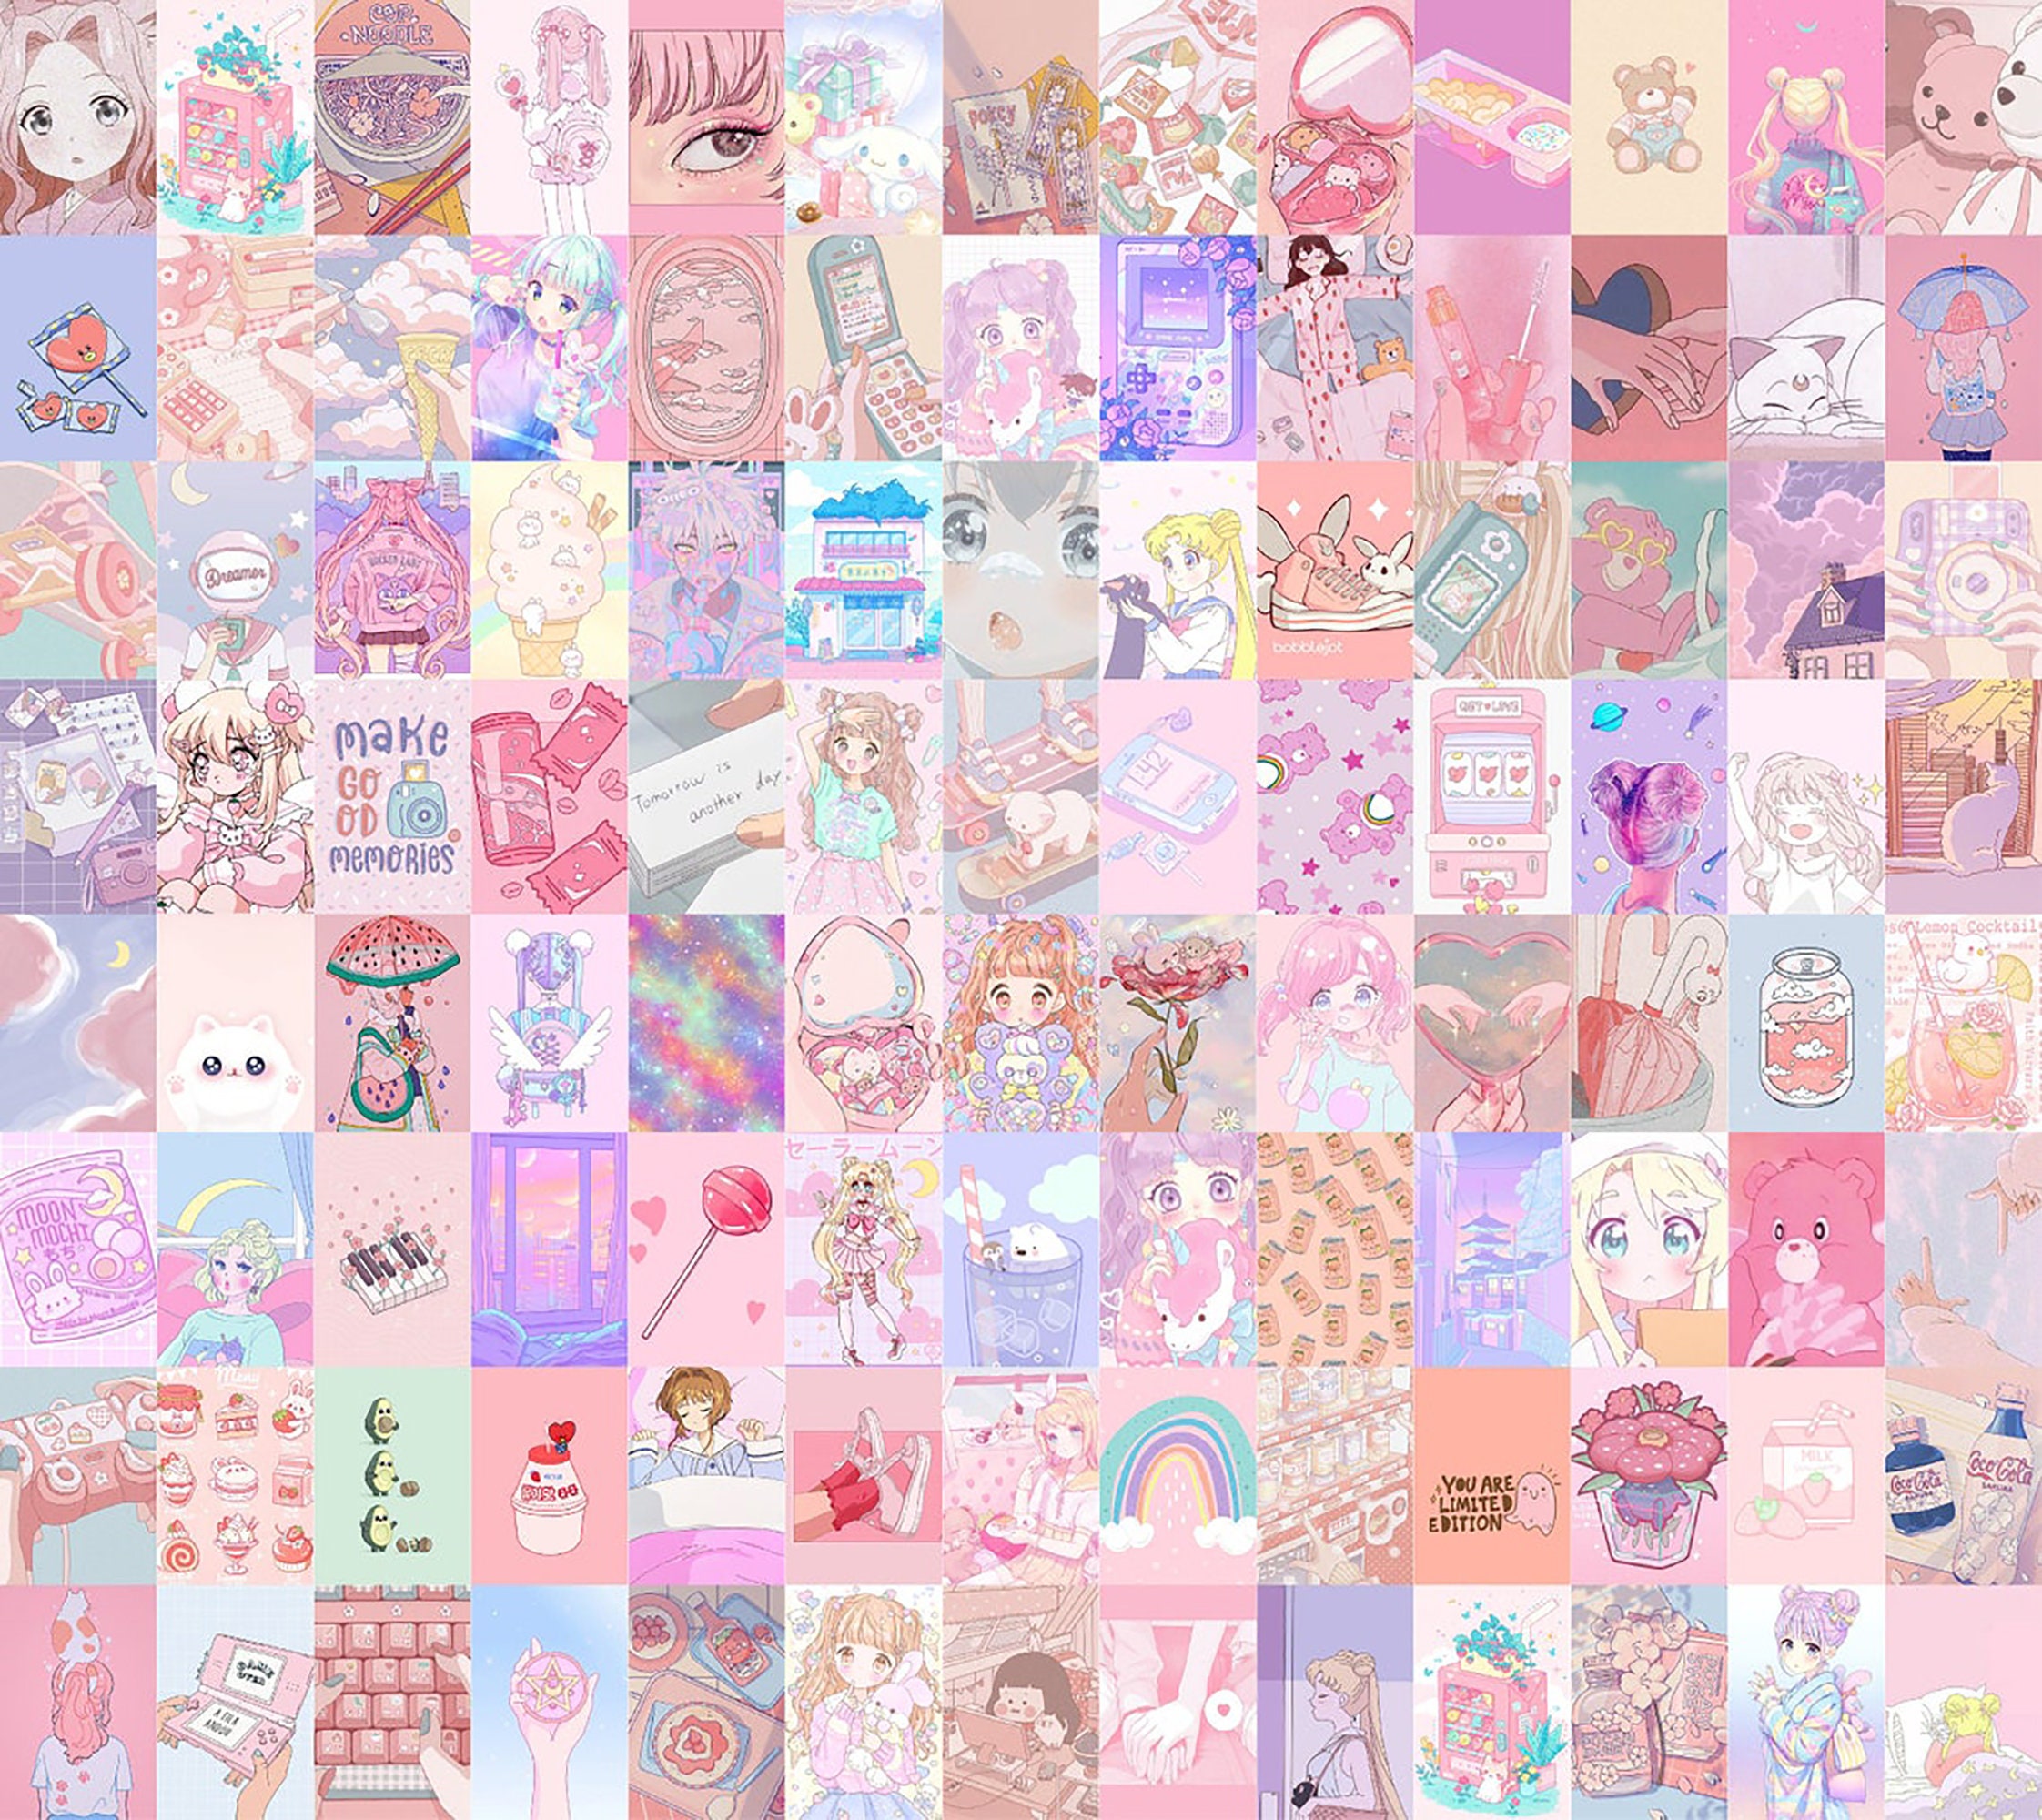 97 Decor Kawaii Room Decor Aesthetic Japanese  Kawaii Poster  Kawaii Decor  for Bedroom Cute Anime Room Decor Aesthetic Collage Anime Kawaii Wall  Decor Pink Kawaii Stuff for Room 8x10 UNFRAMED 